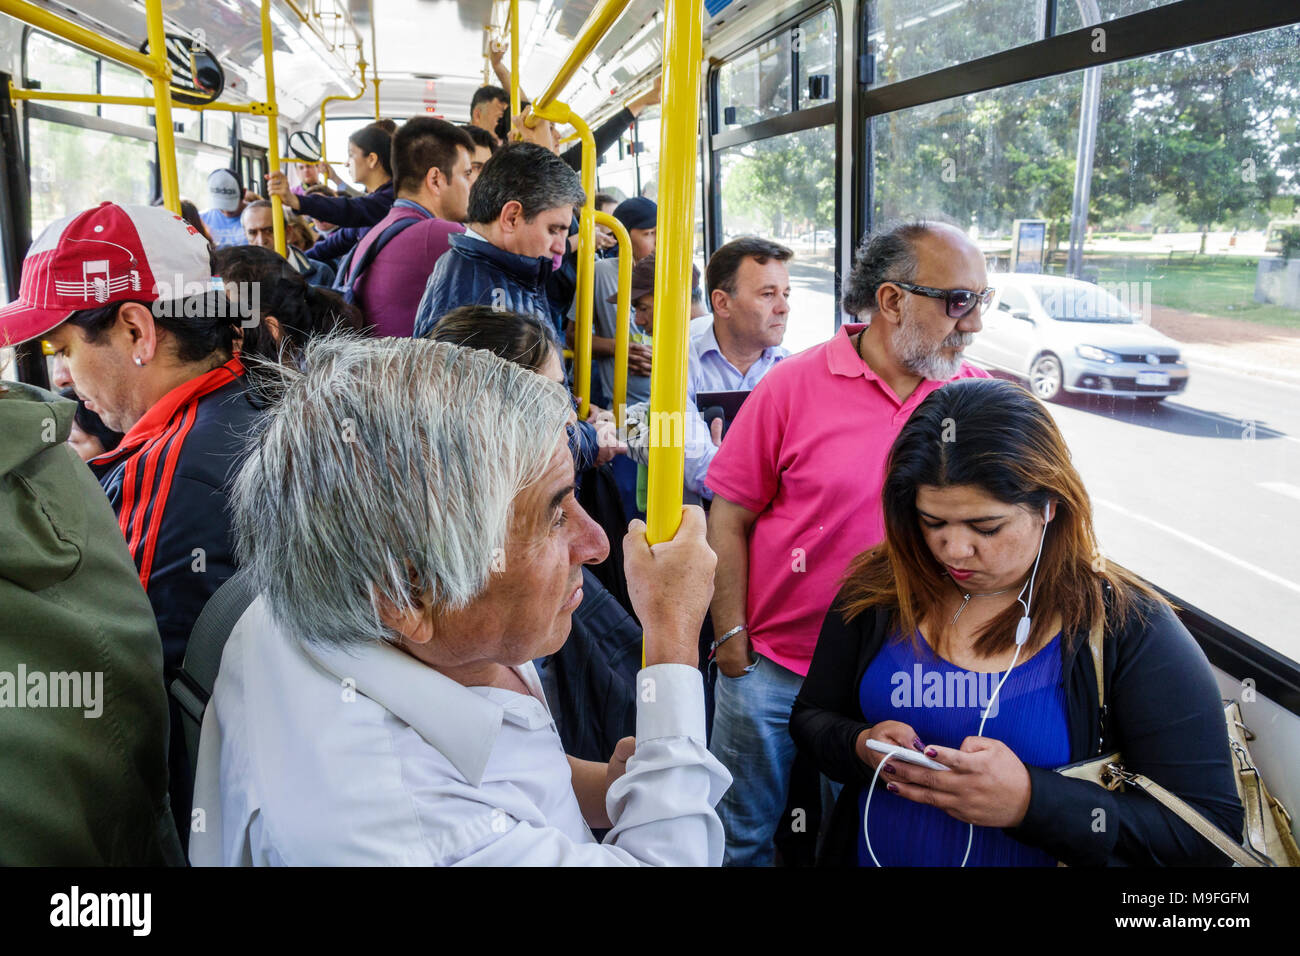 Buenos Aires Argentina,bus,passenger passengers rider riders,standing,man men male,woman female women,standing,listening,earbuds,Hispanic,ARG171128221 Stock Photo